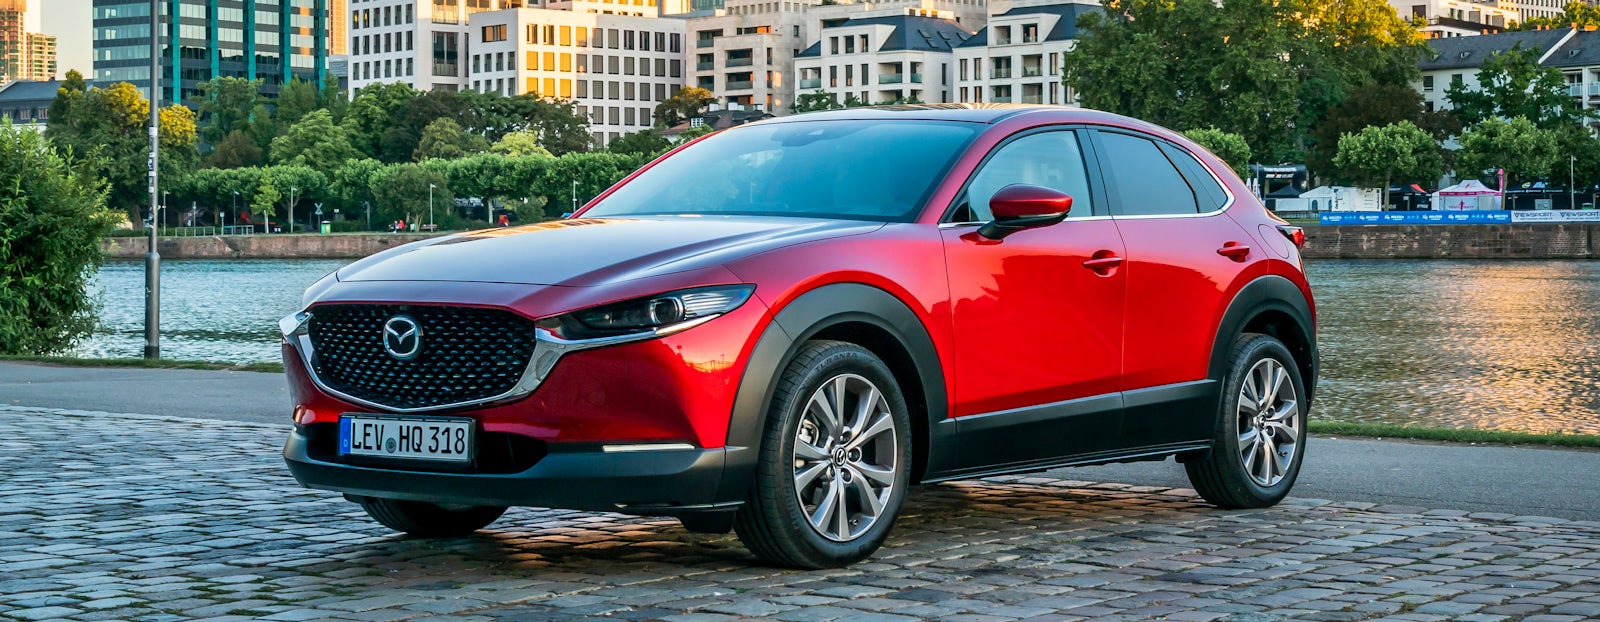 Mazda Cx 30 2019 Preise Technische Daten Verkaufsstart Carwow De